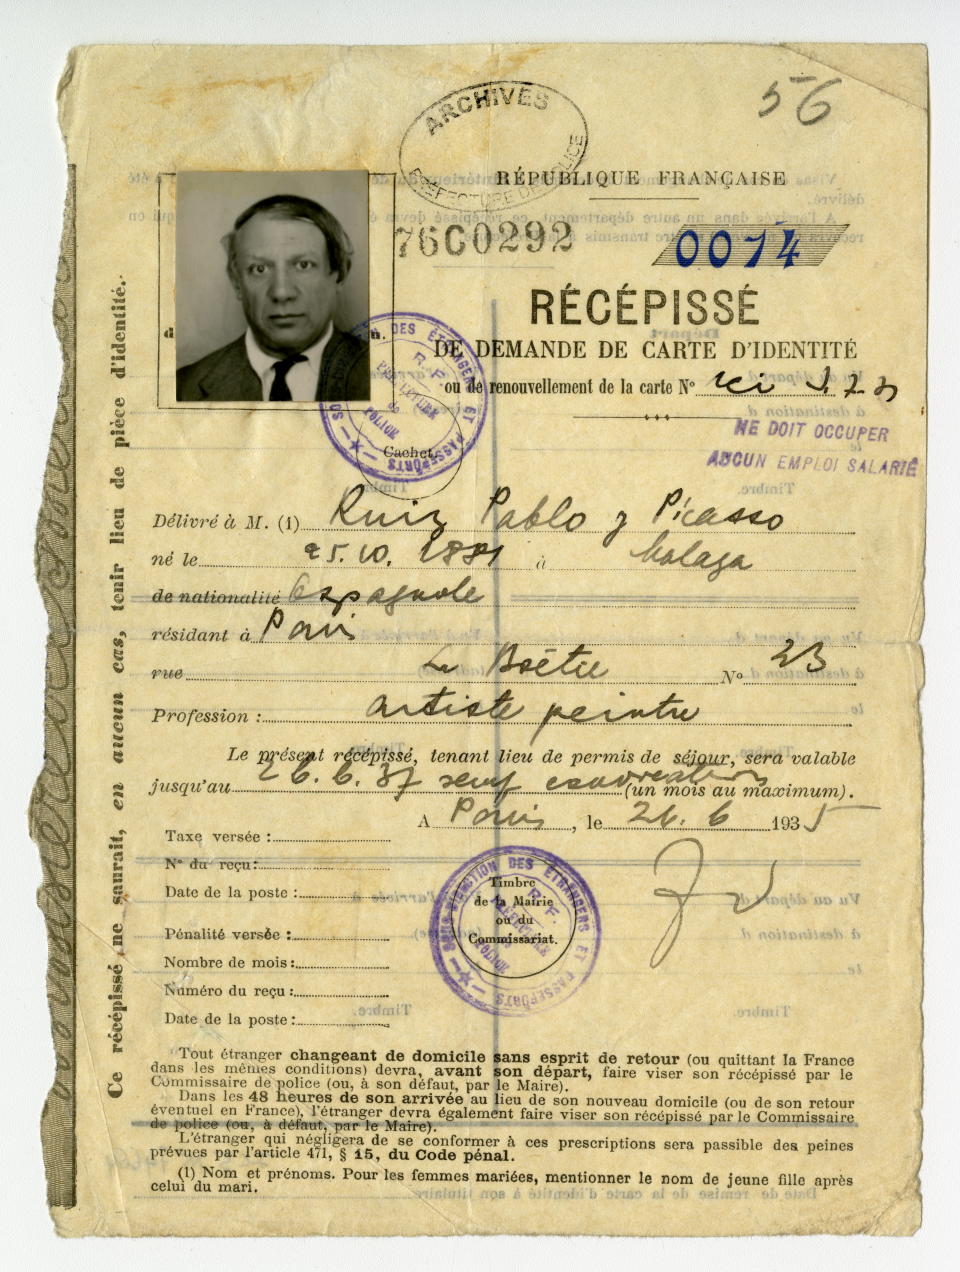 "Official receipt from Picasso’s request for a foreigner’s identity card, 1935<span class="copyright">Courtesy of the Archives de la Préfecture de Police de Paris</span>